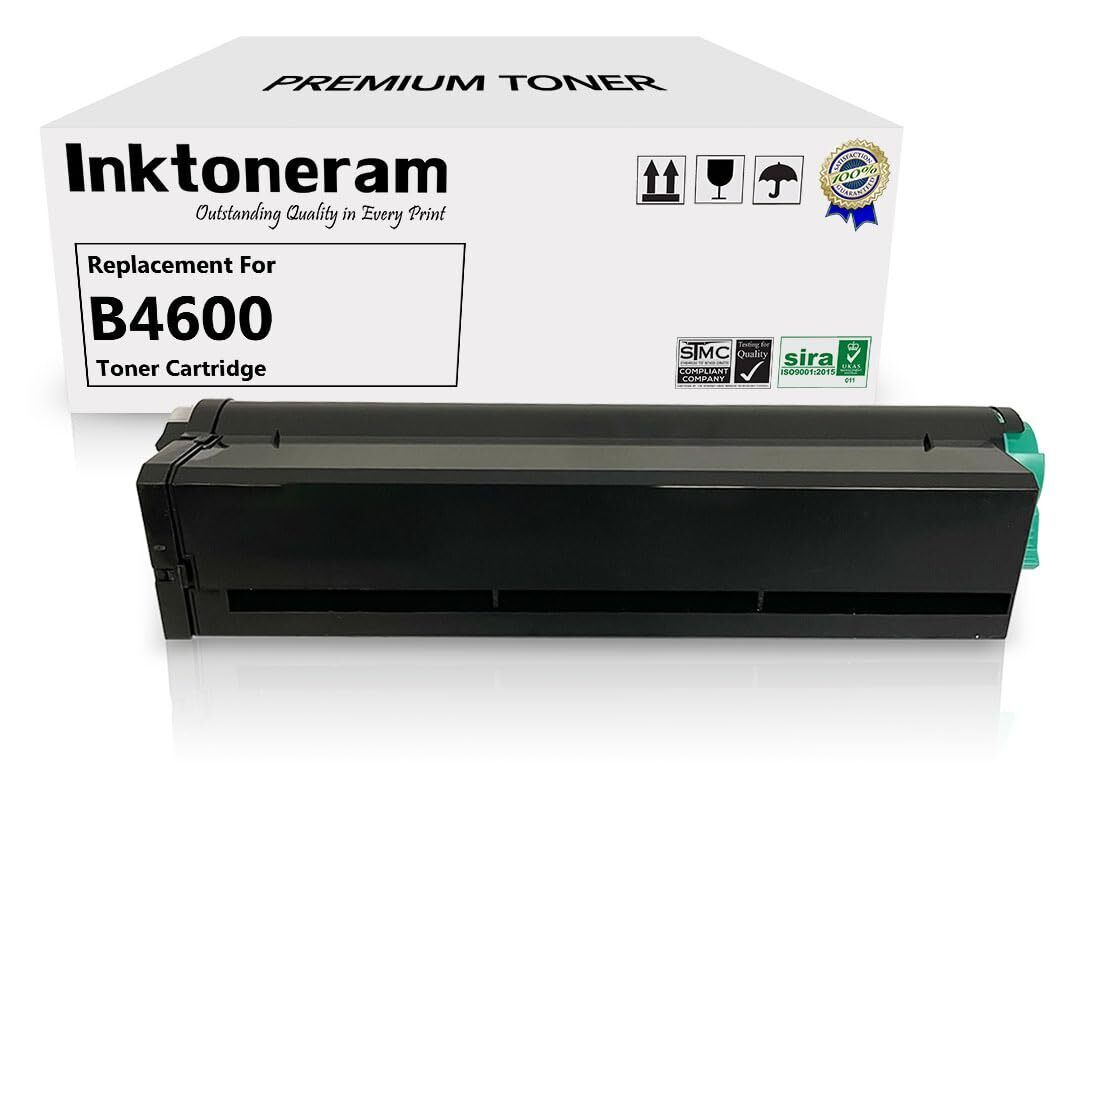 Inktoneram Compatible Toner Cartridge Replacement for Okidata B4600 B4550 (High